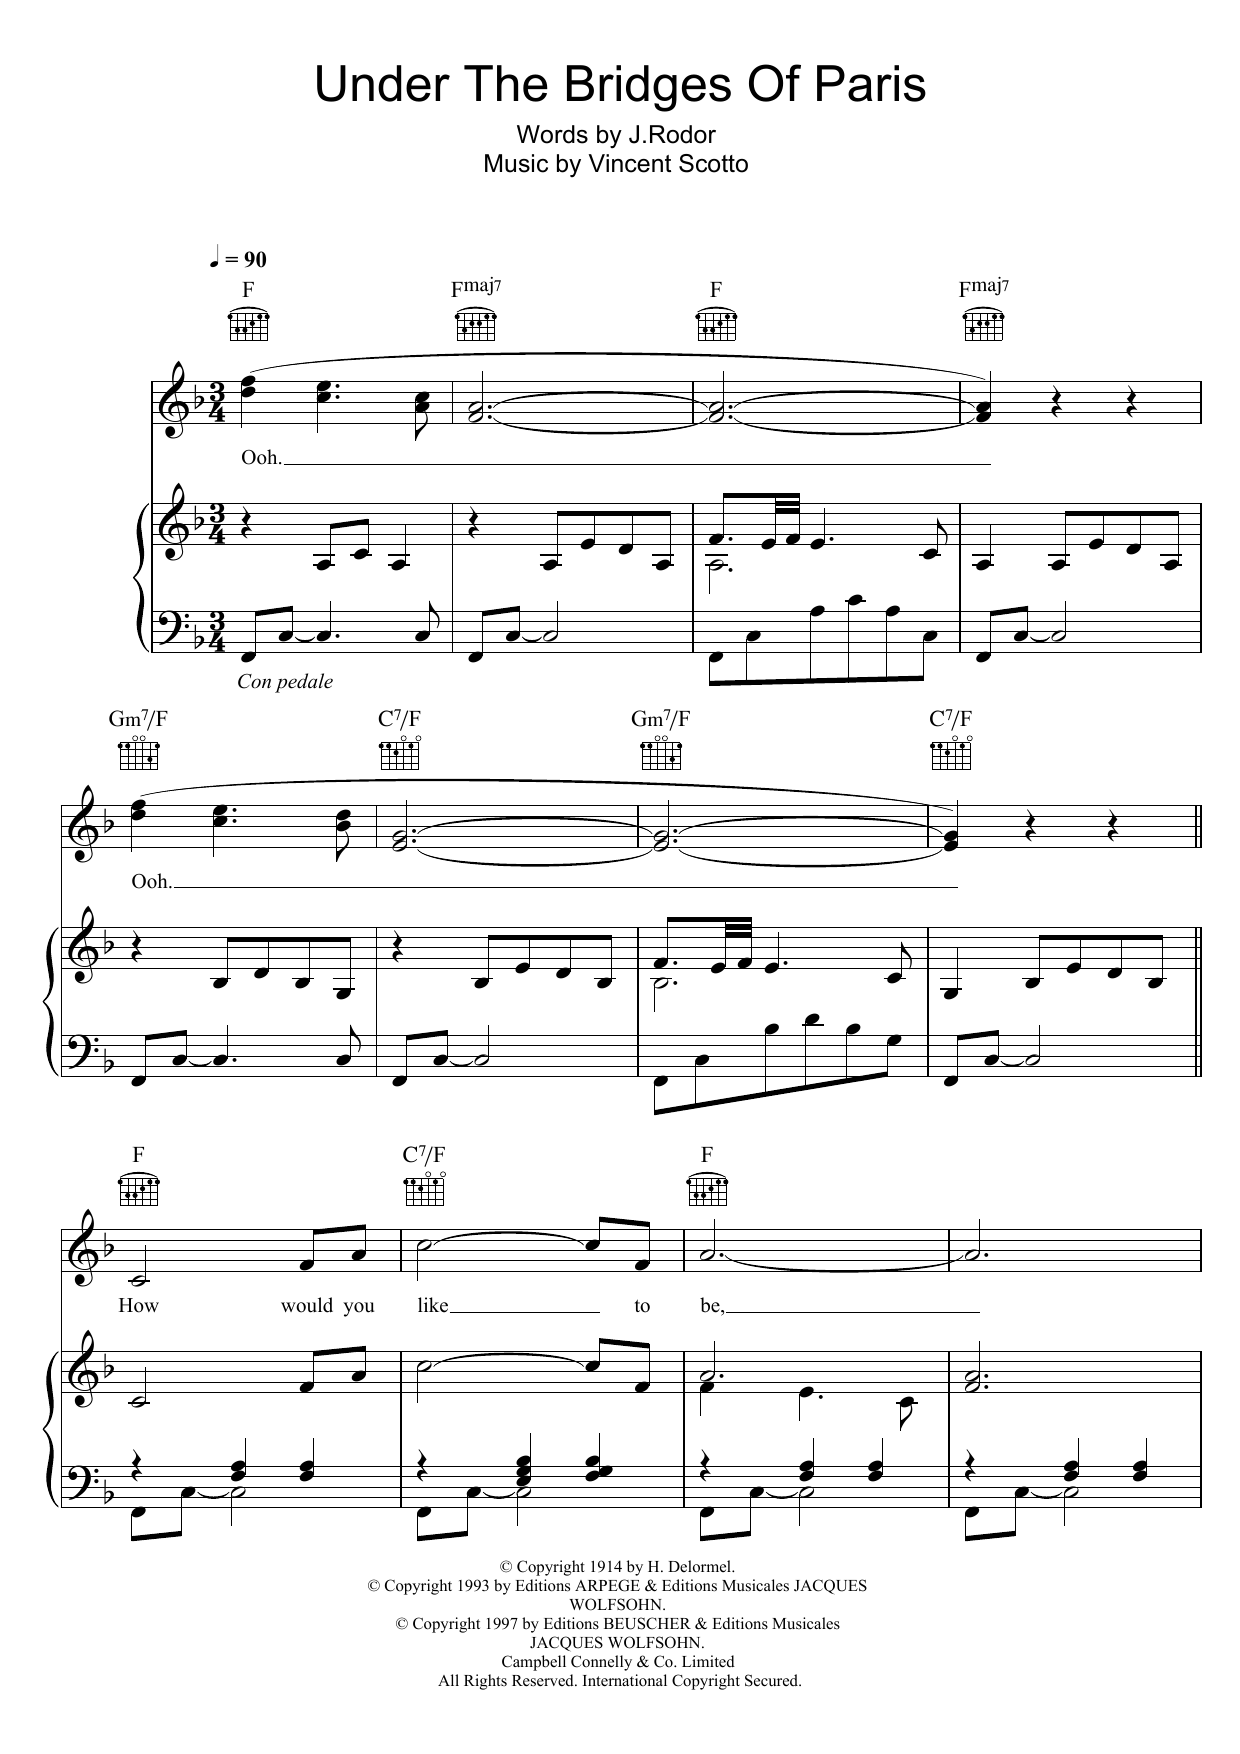 Dean Martin Under The Bridges Of Paris (Sous Les Ponts De Paris) Sheet Music Notes & Chords for Piano, Vocal & Guitar (Right-Hand Melody) - Download or Print PDF